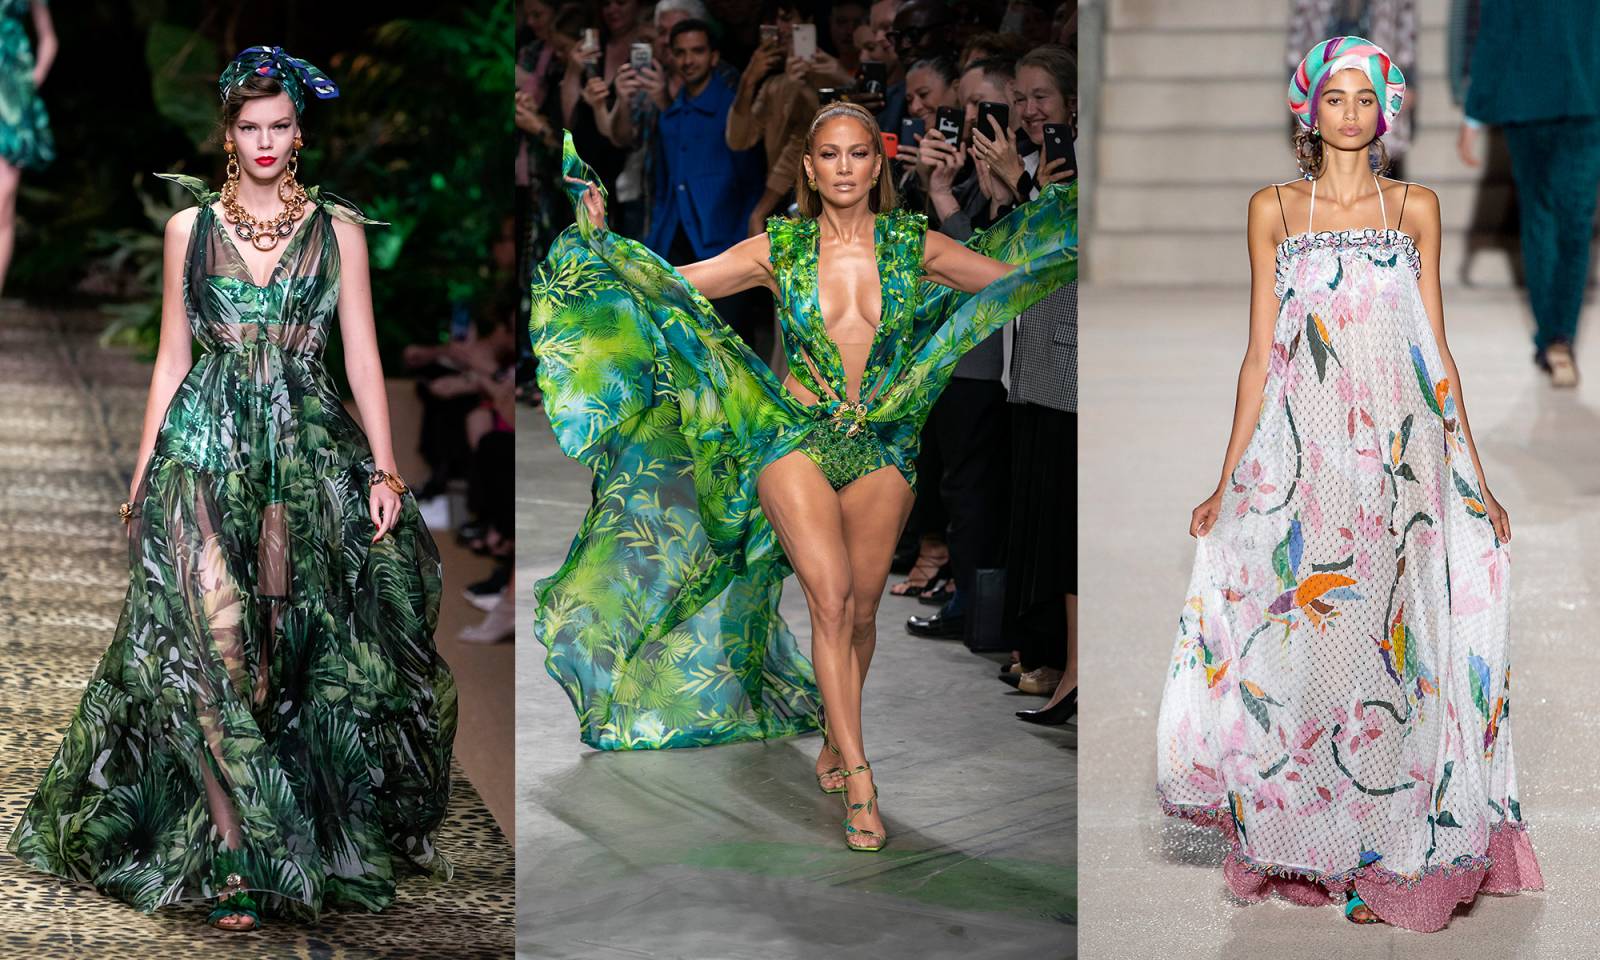 Od lewej: Dolce&Gabbana, Versace, Missoni